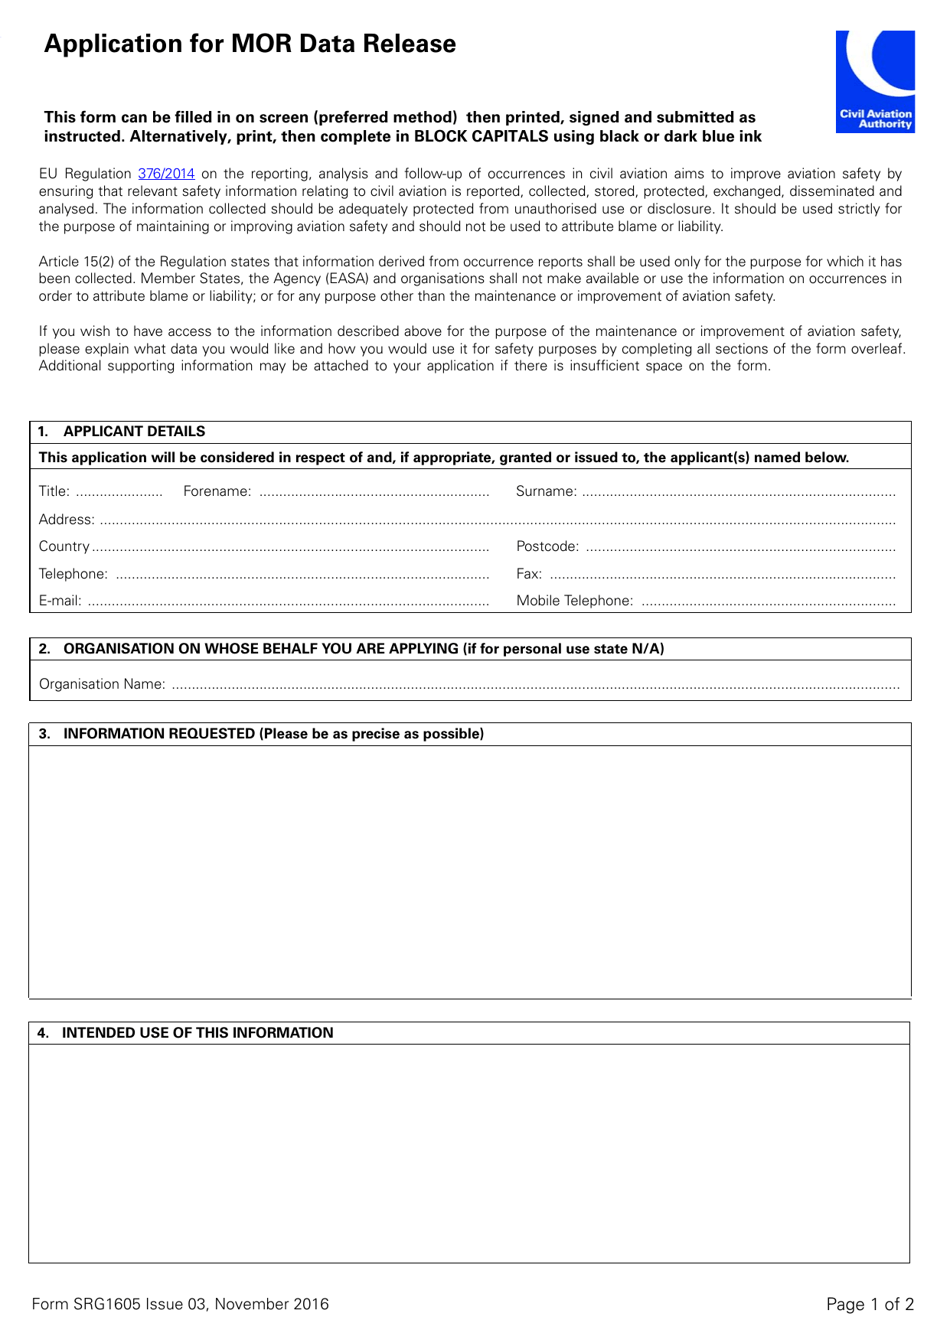 Form SRG1605 Application for Mor Data Release - United Kingdom, Page 1